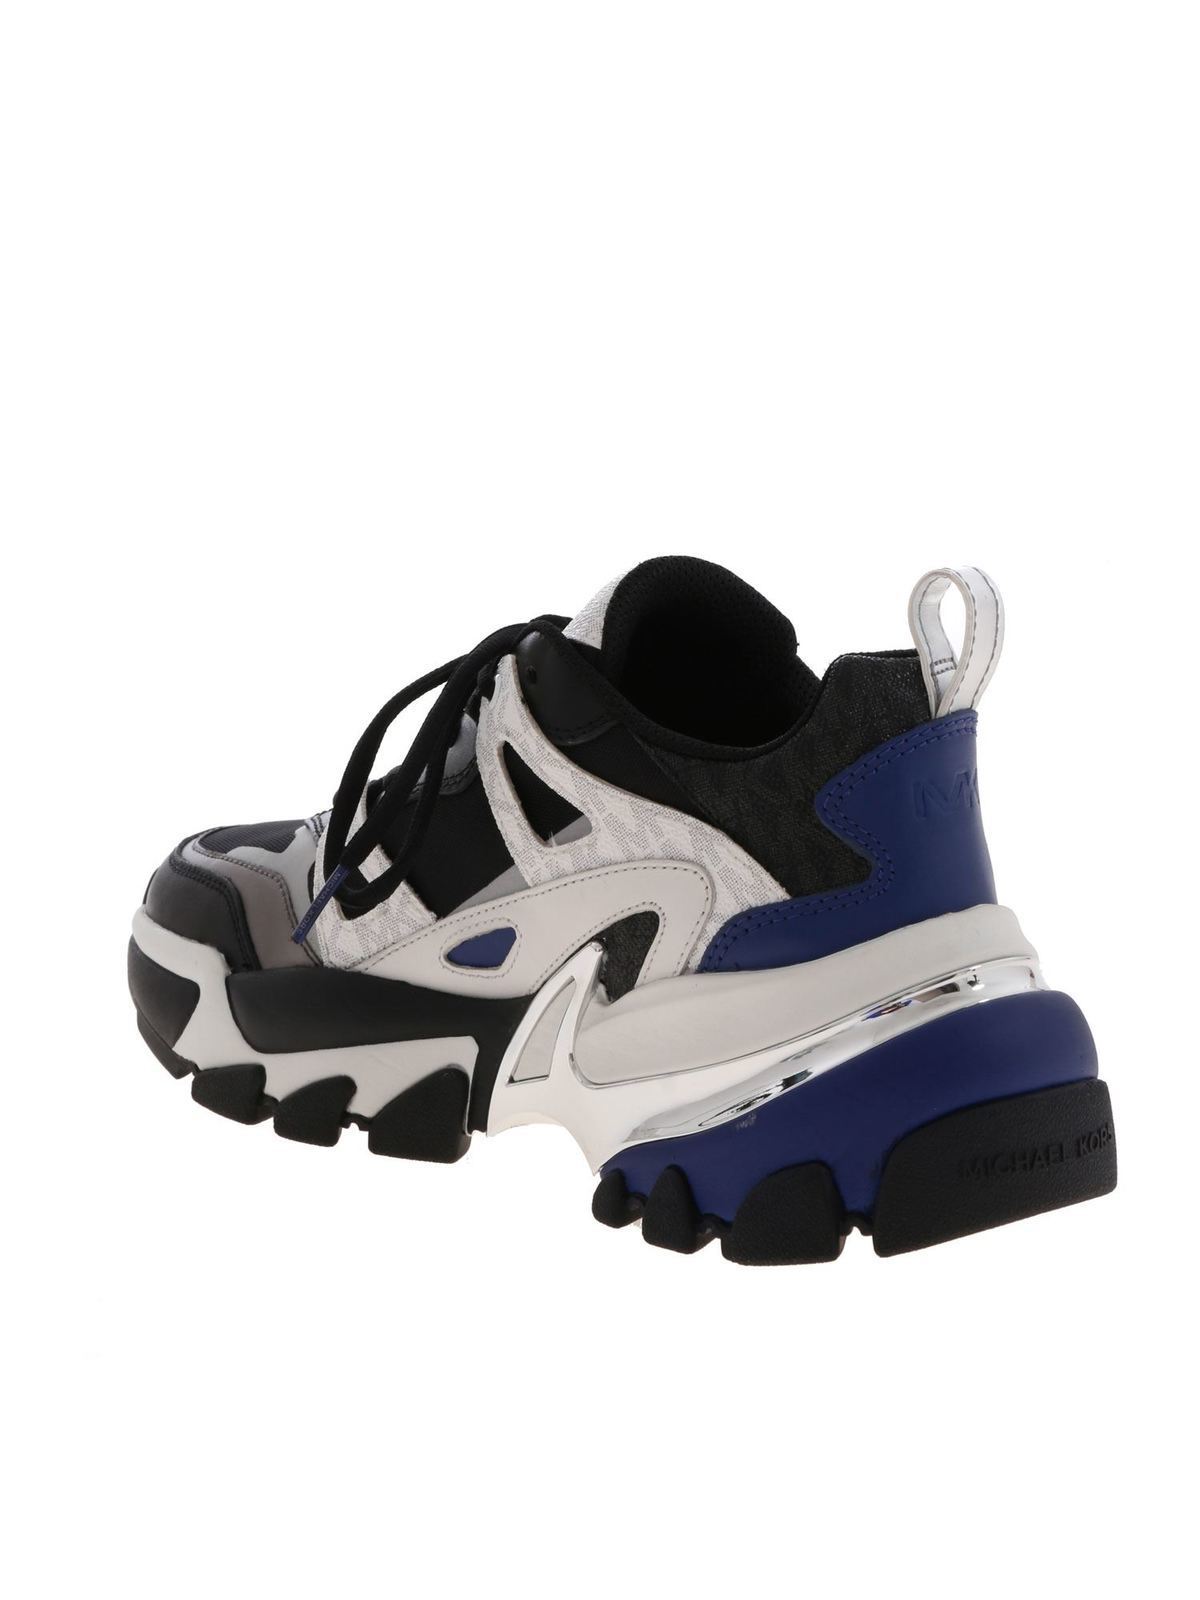 Trainers Michael Kors - Sneakers Penn black blue and white -  42ROPEFS2DTWILIGHTBLUE